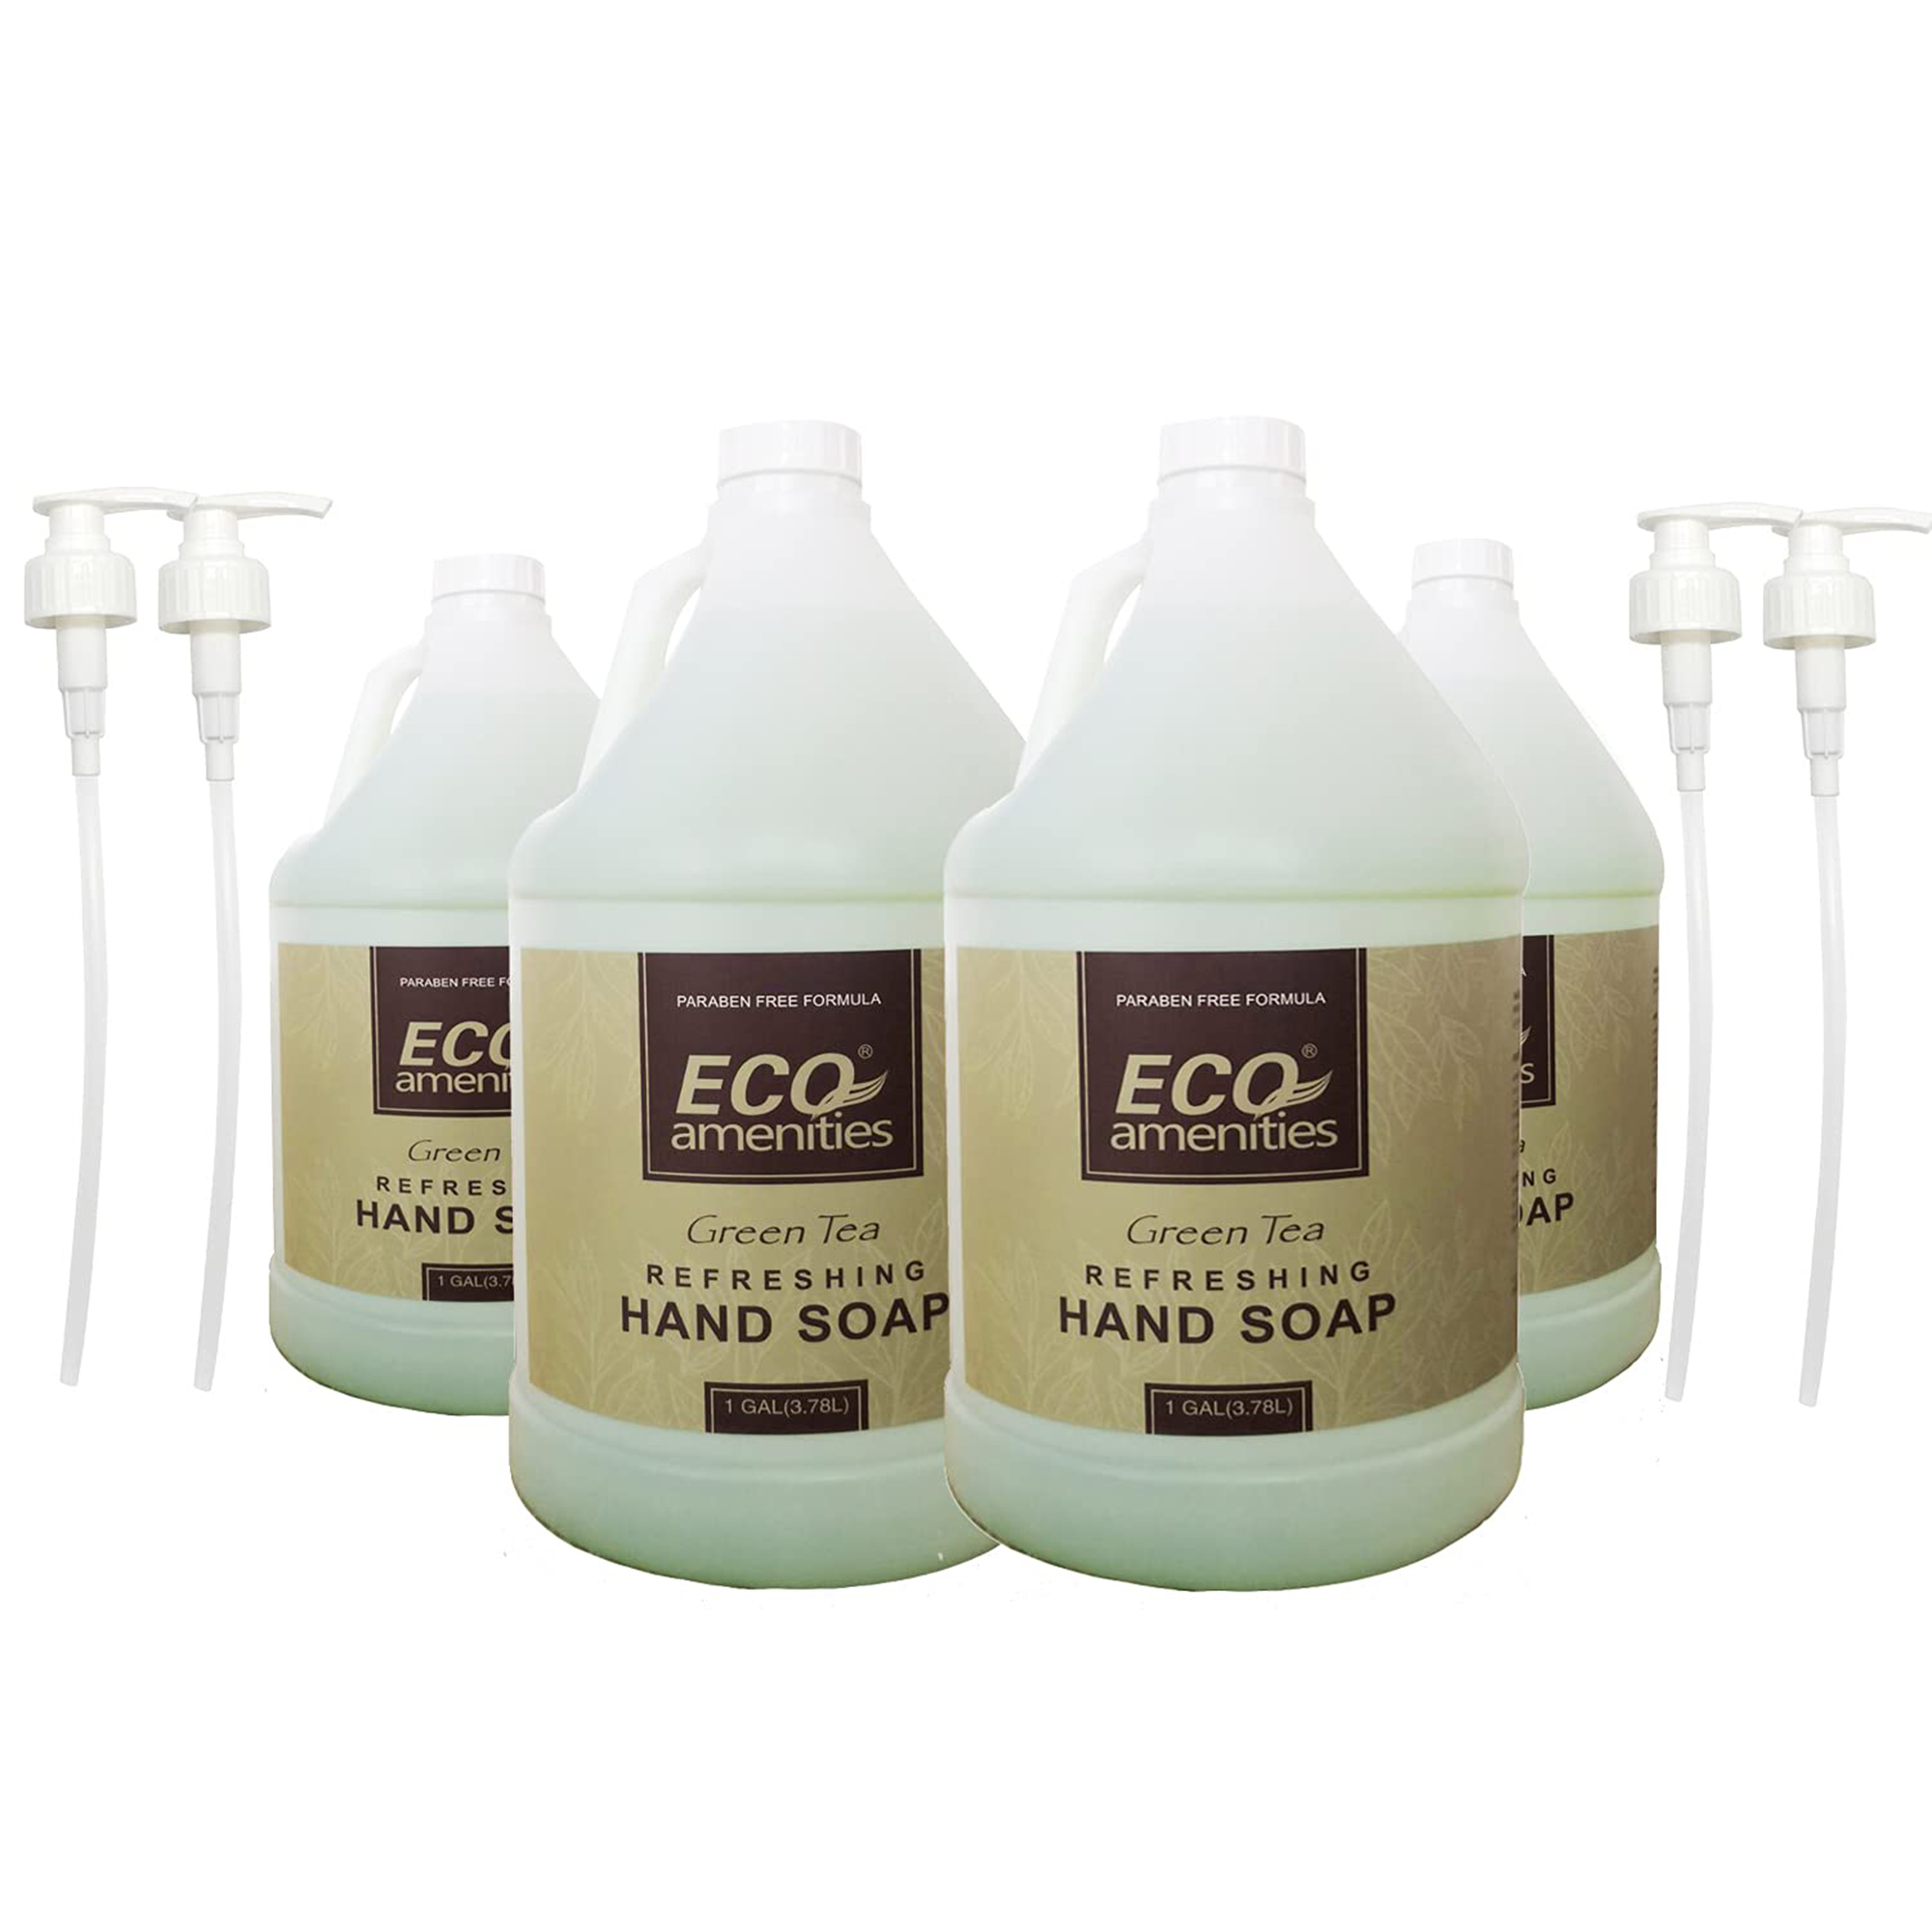 ECO AMENITIES Gallon Bottle Shampoo and Body Wash 2 in 1, 1 Gallon